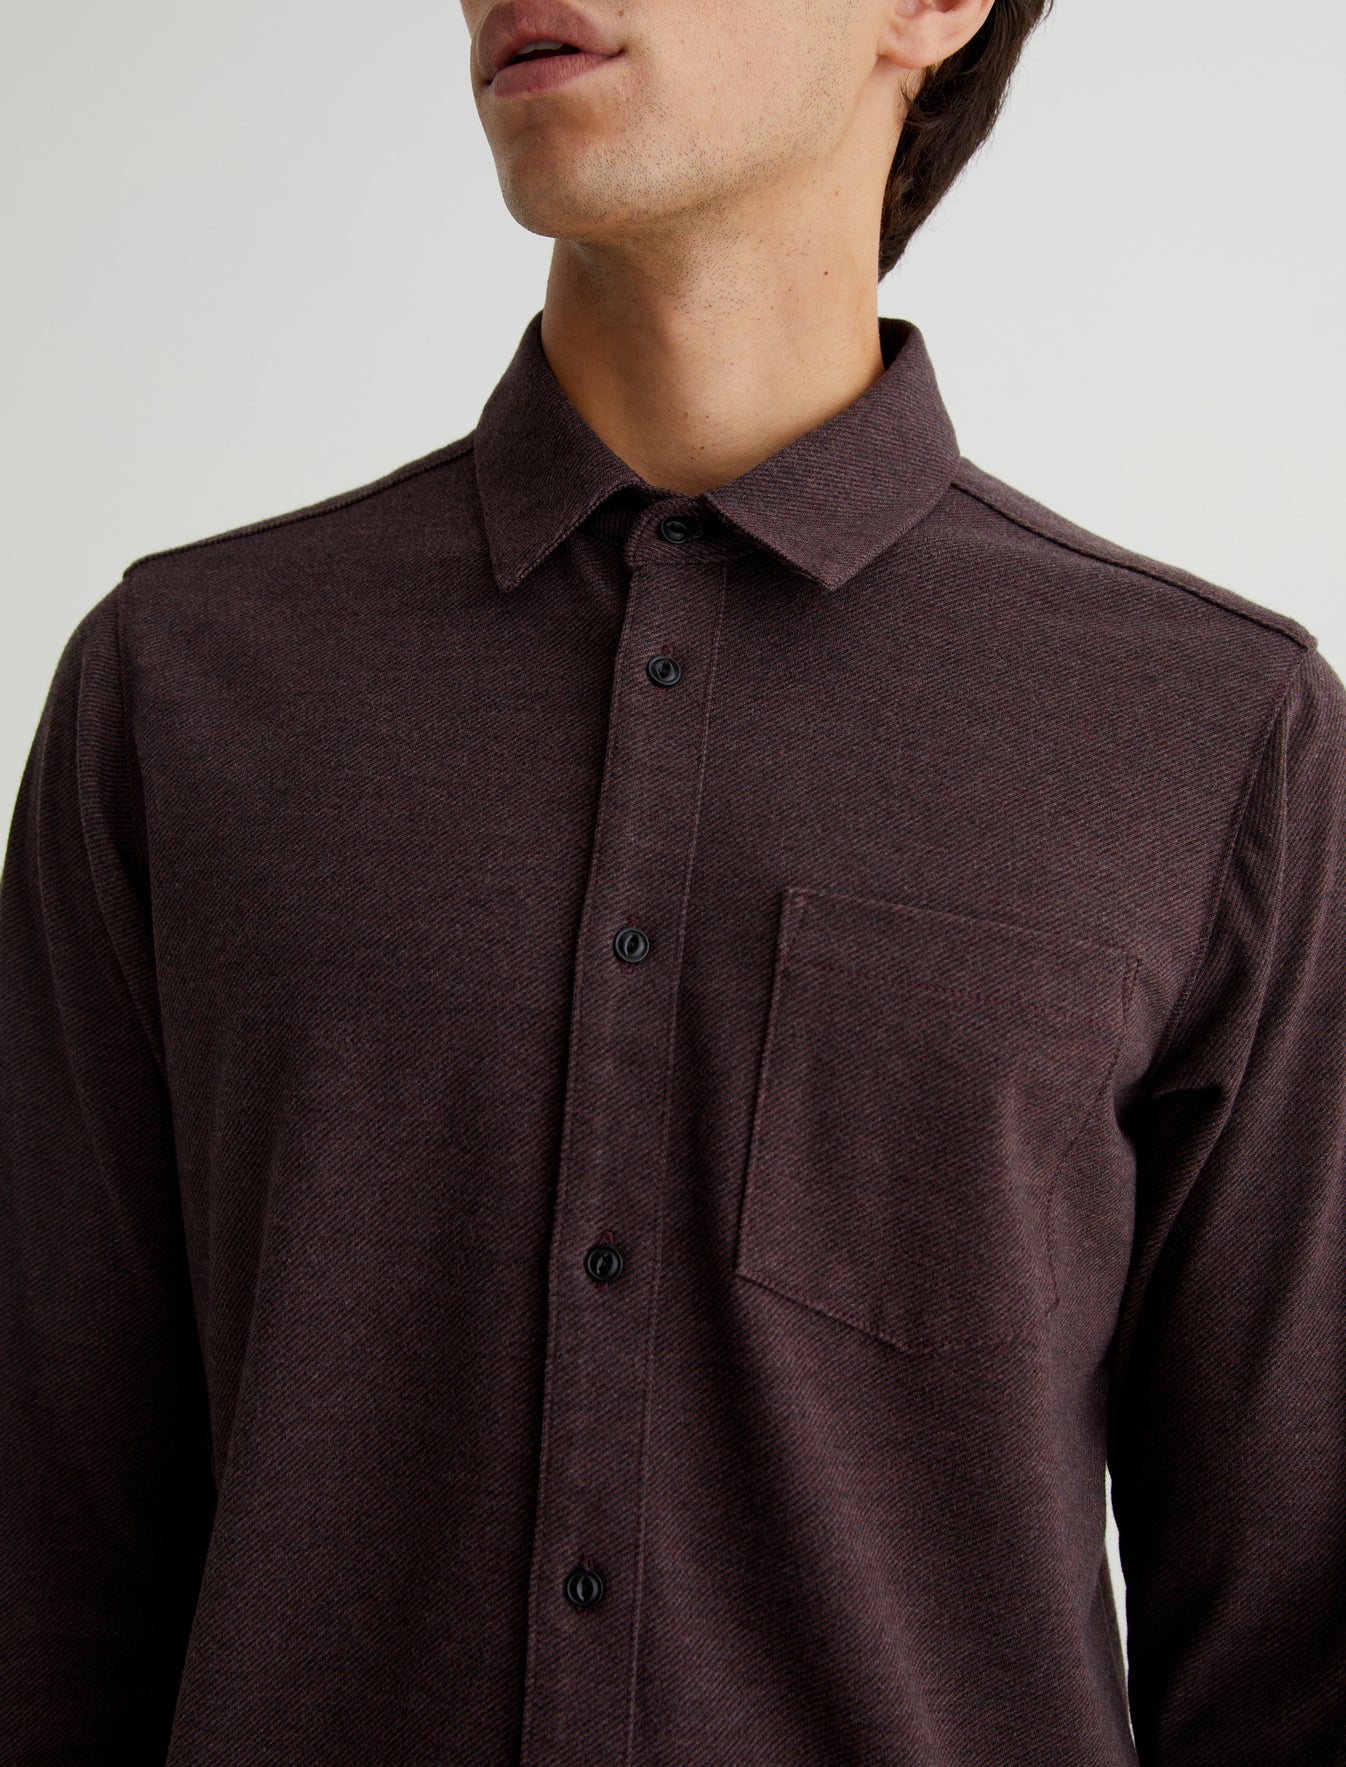 Mason Shirt Heather Charcoal/Dark Plum Classic Fit Long Sleeve Button Up Shirt Mens Top Photo 3